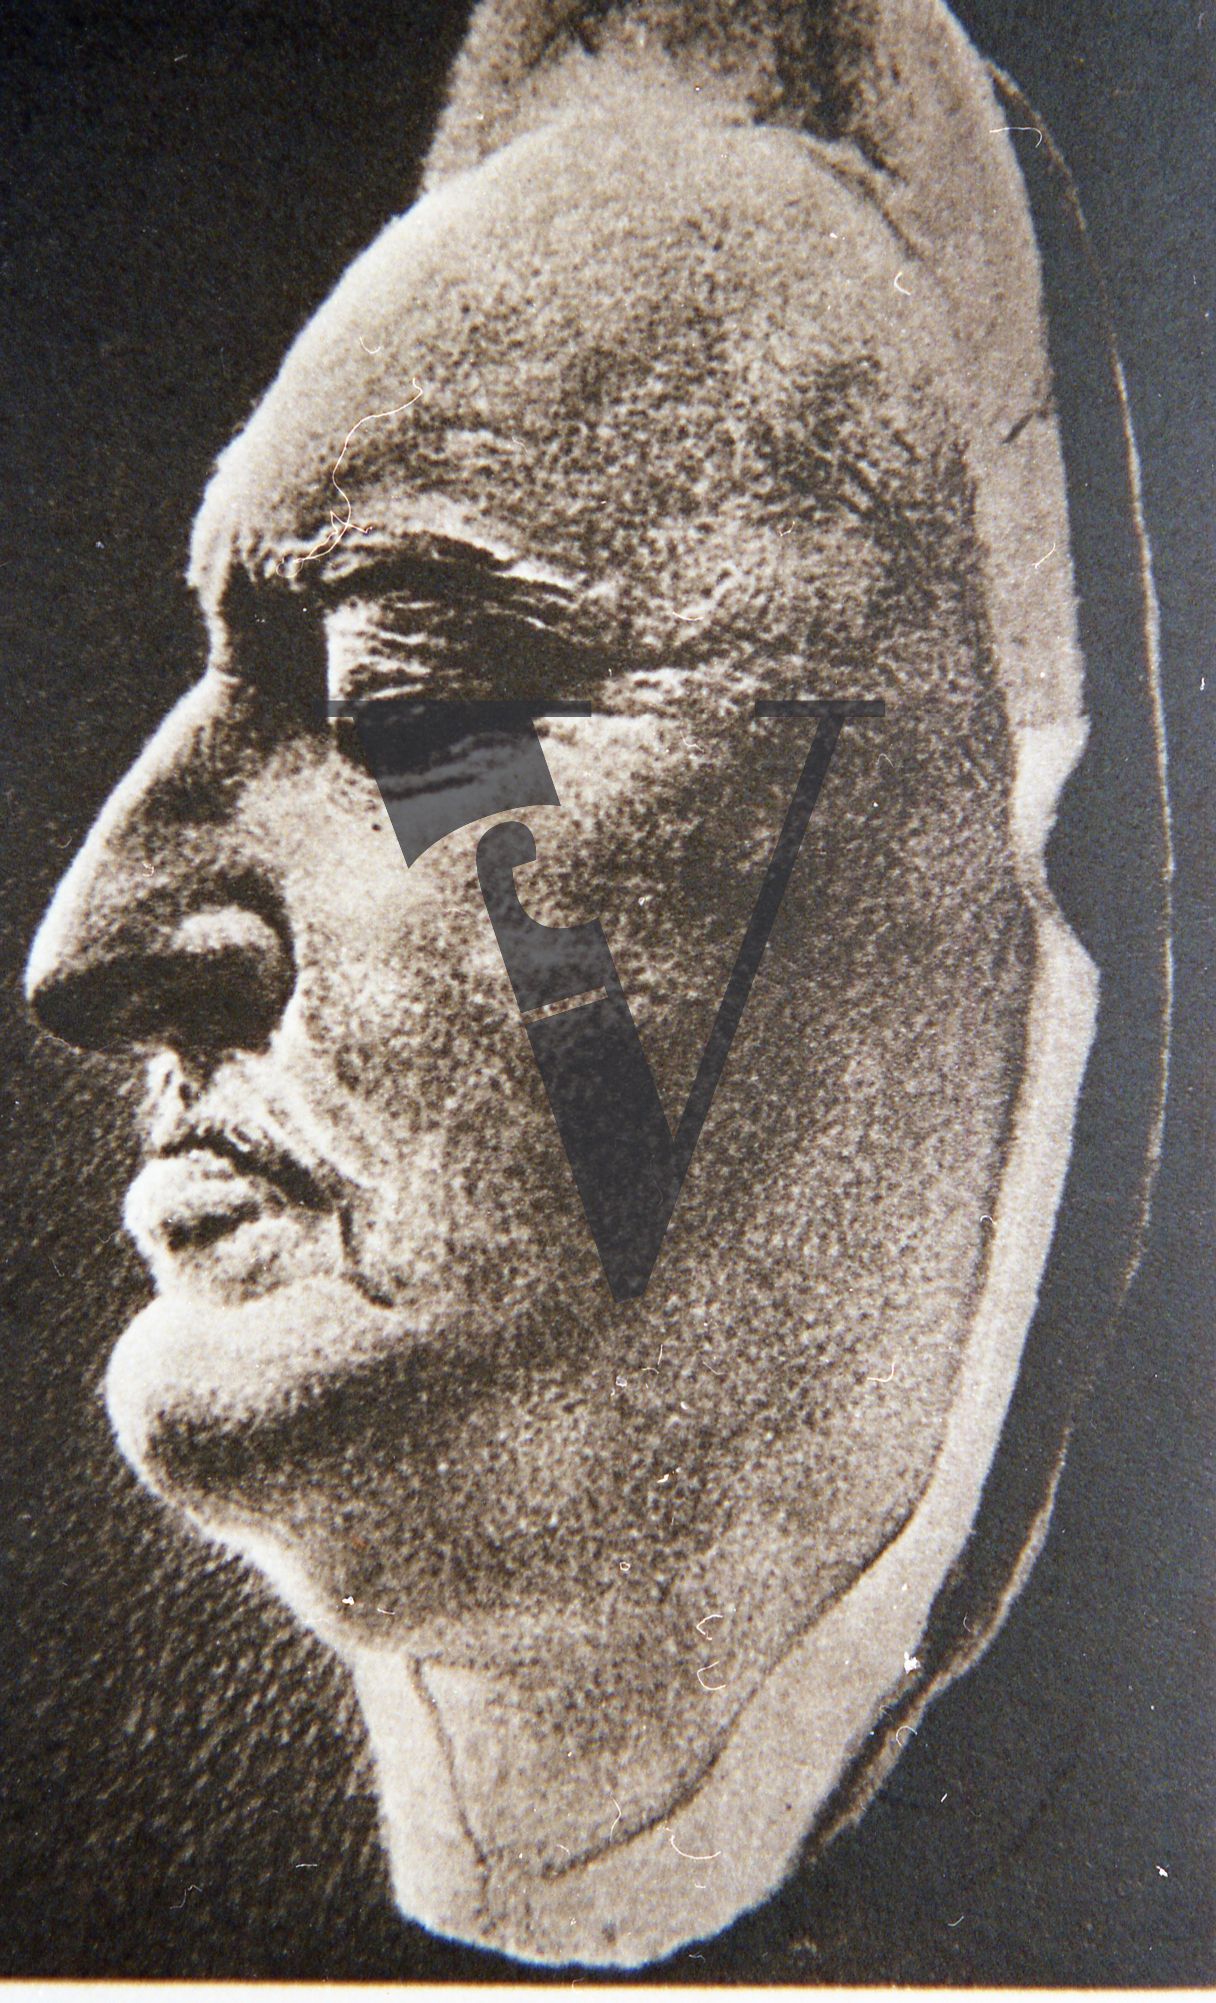 Rhodesia, historical image, Cecil Rhodes’ death mask.